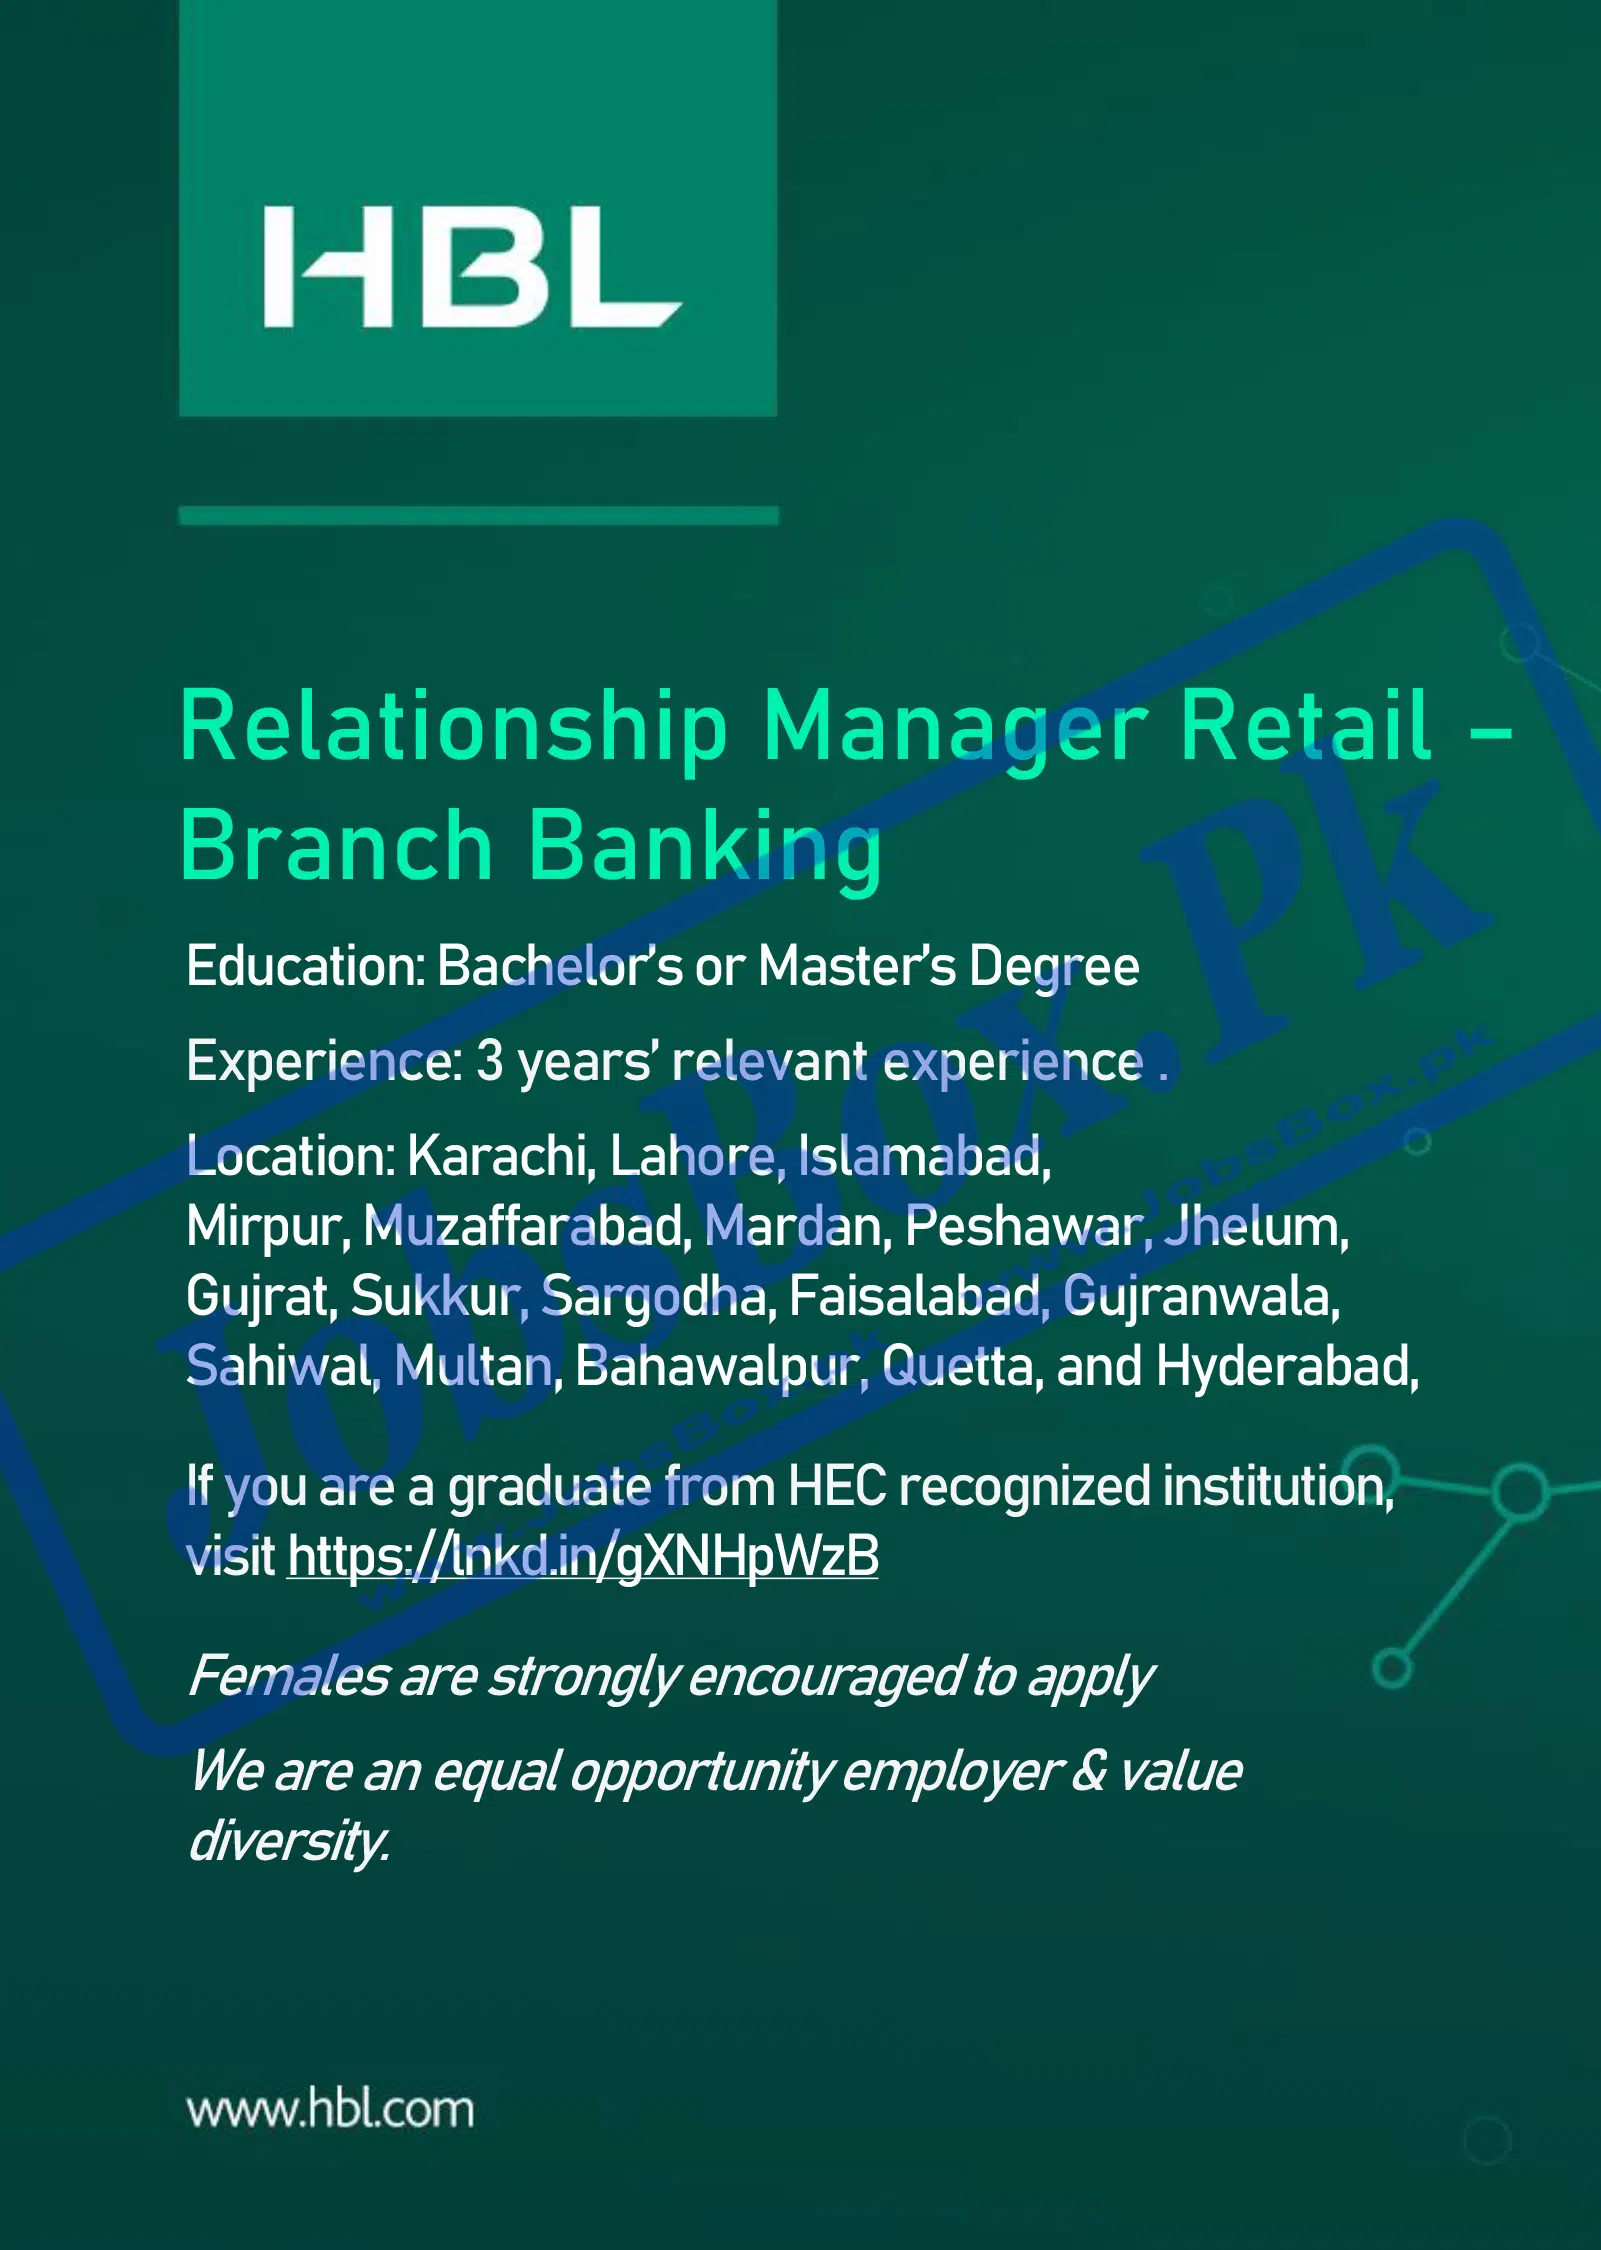 Relationship Manager Retail Jobs at Habib Bank Limited HBL